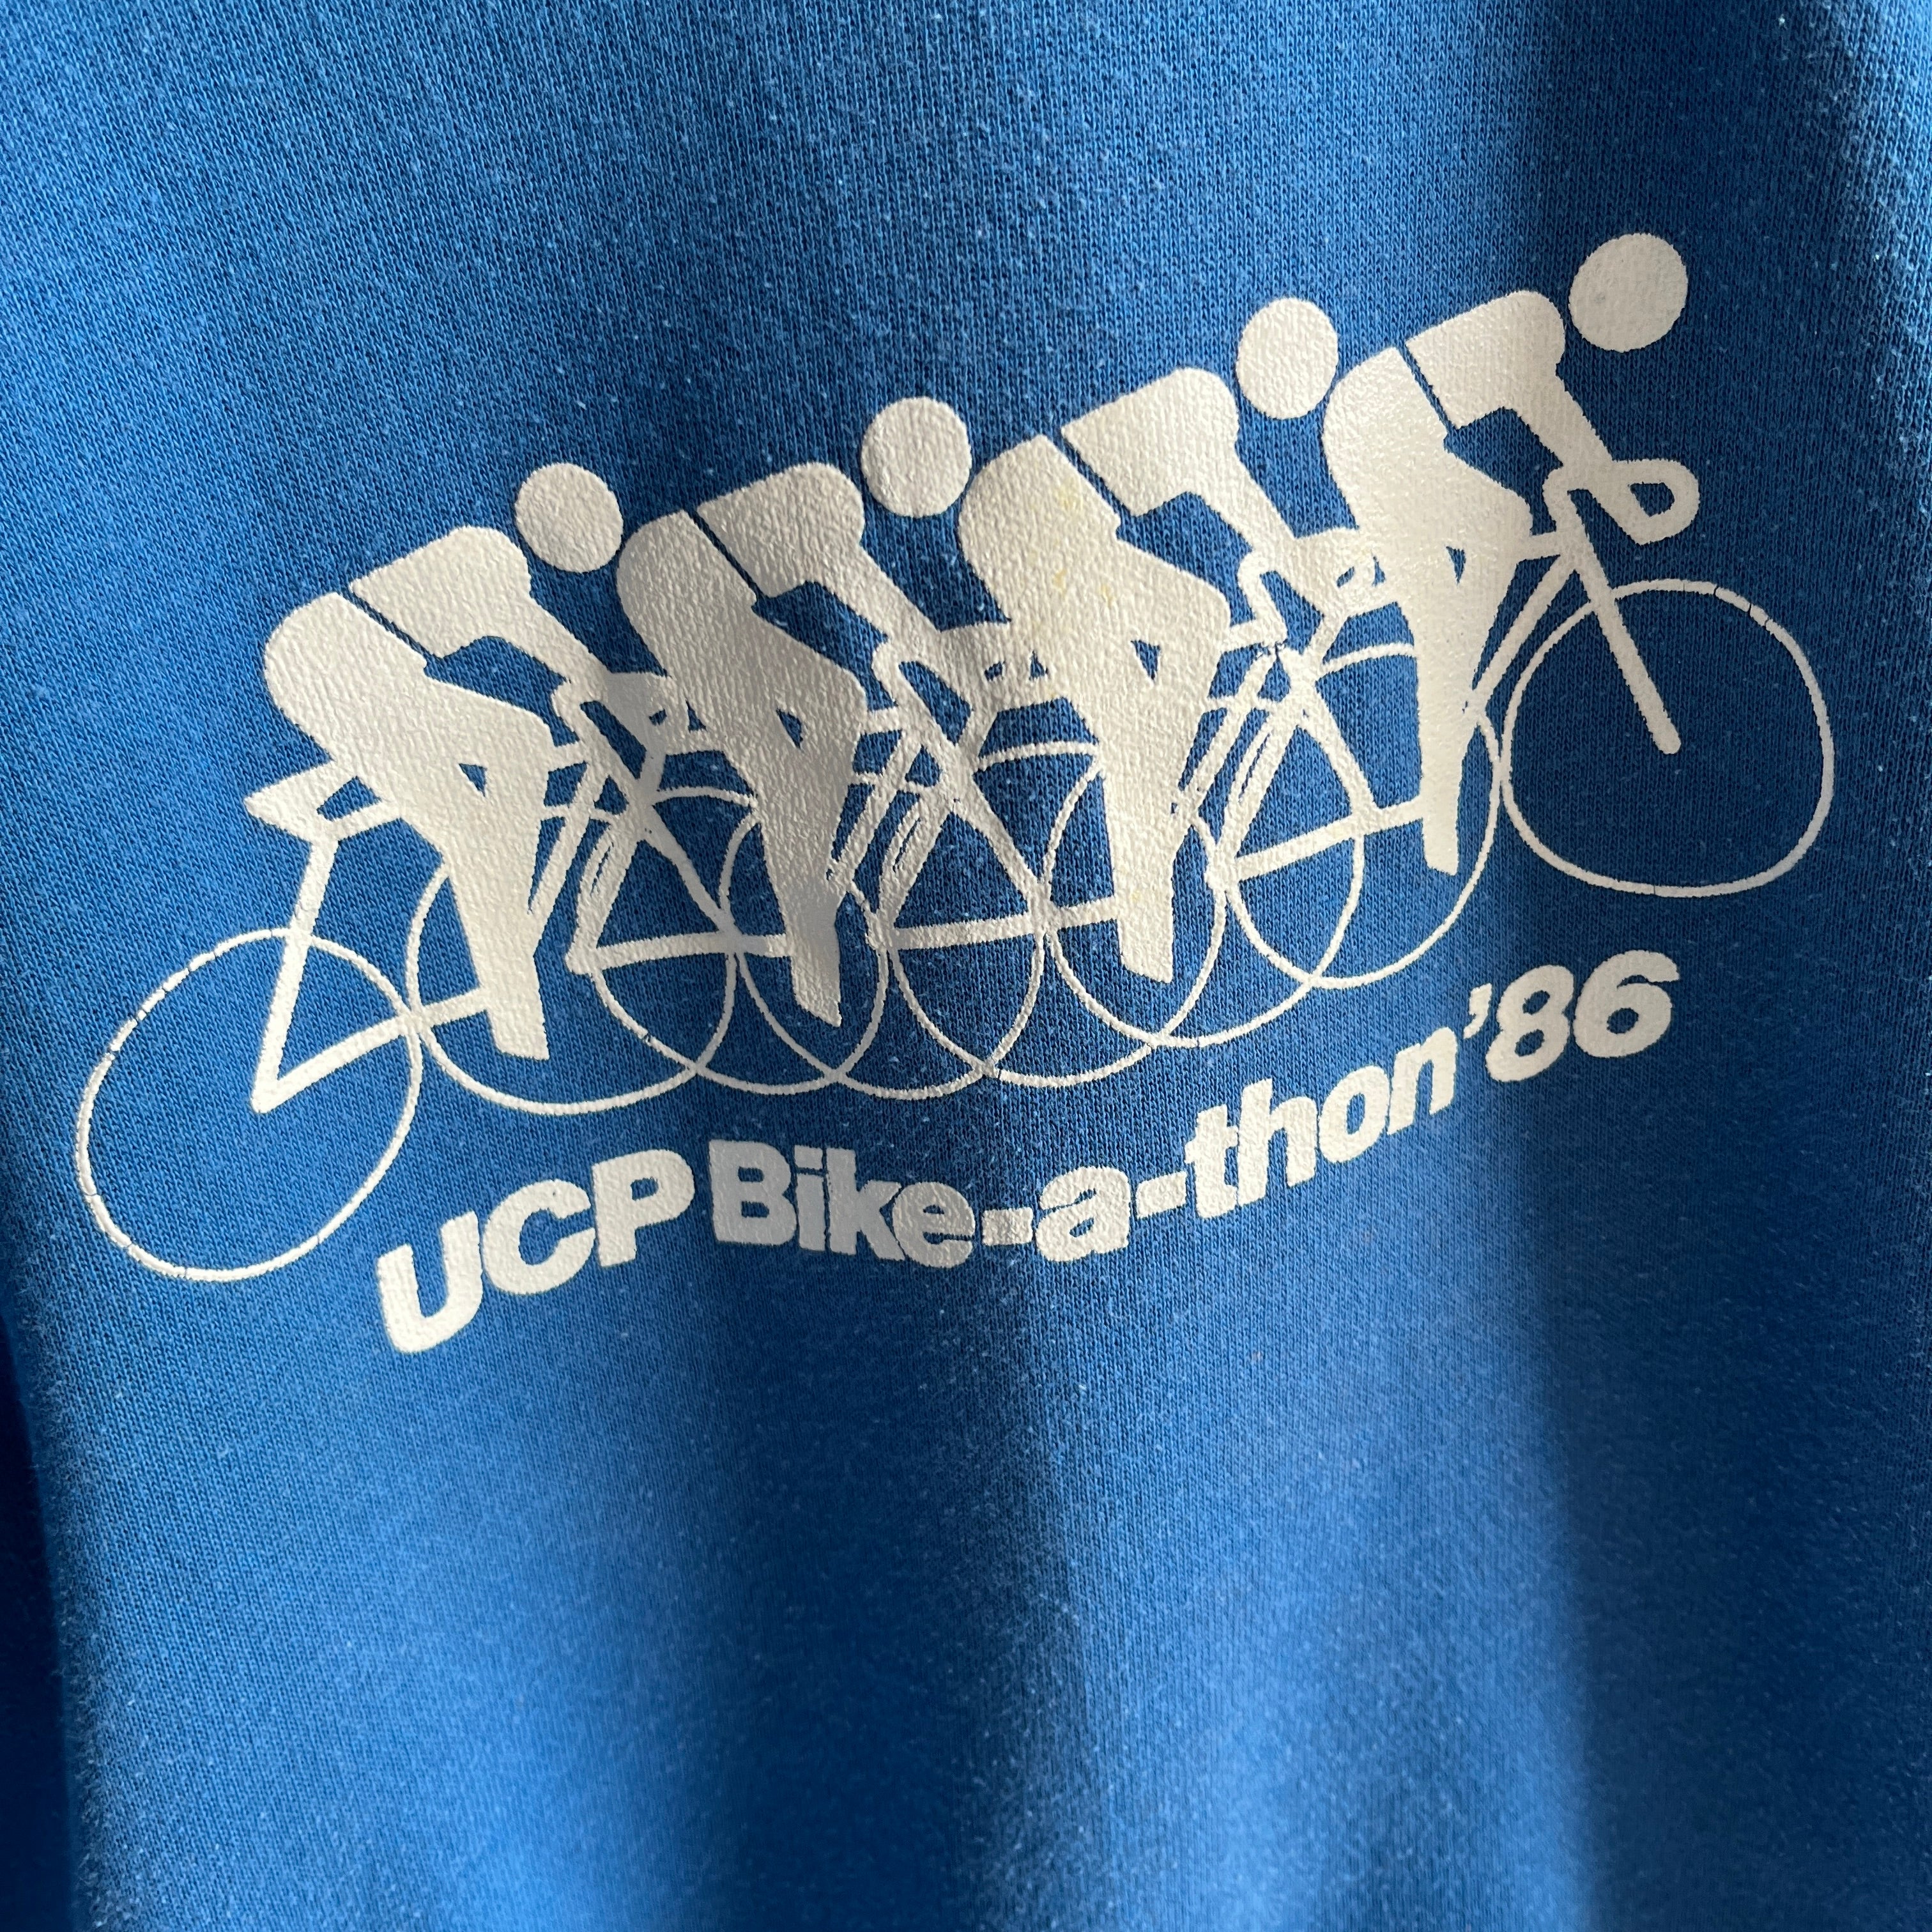 1986 UCP Bike-A-Thon Sweatshirt